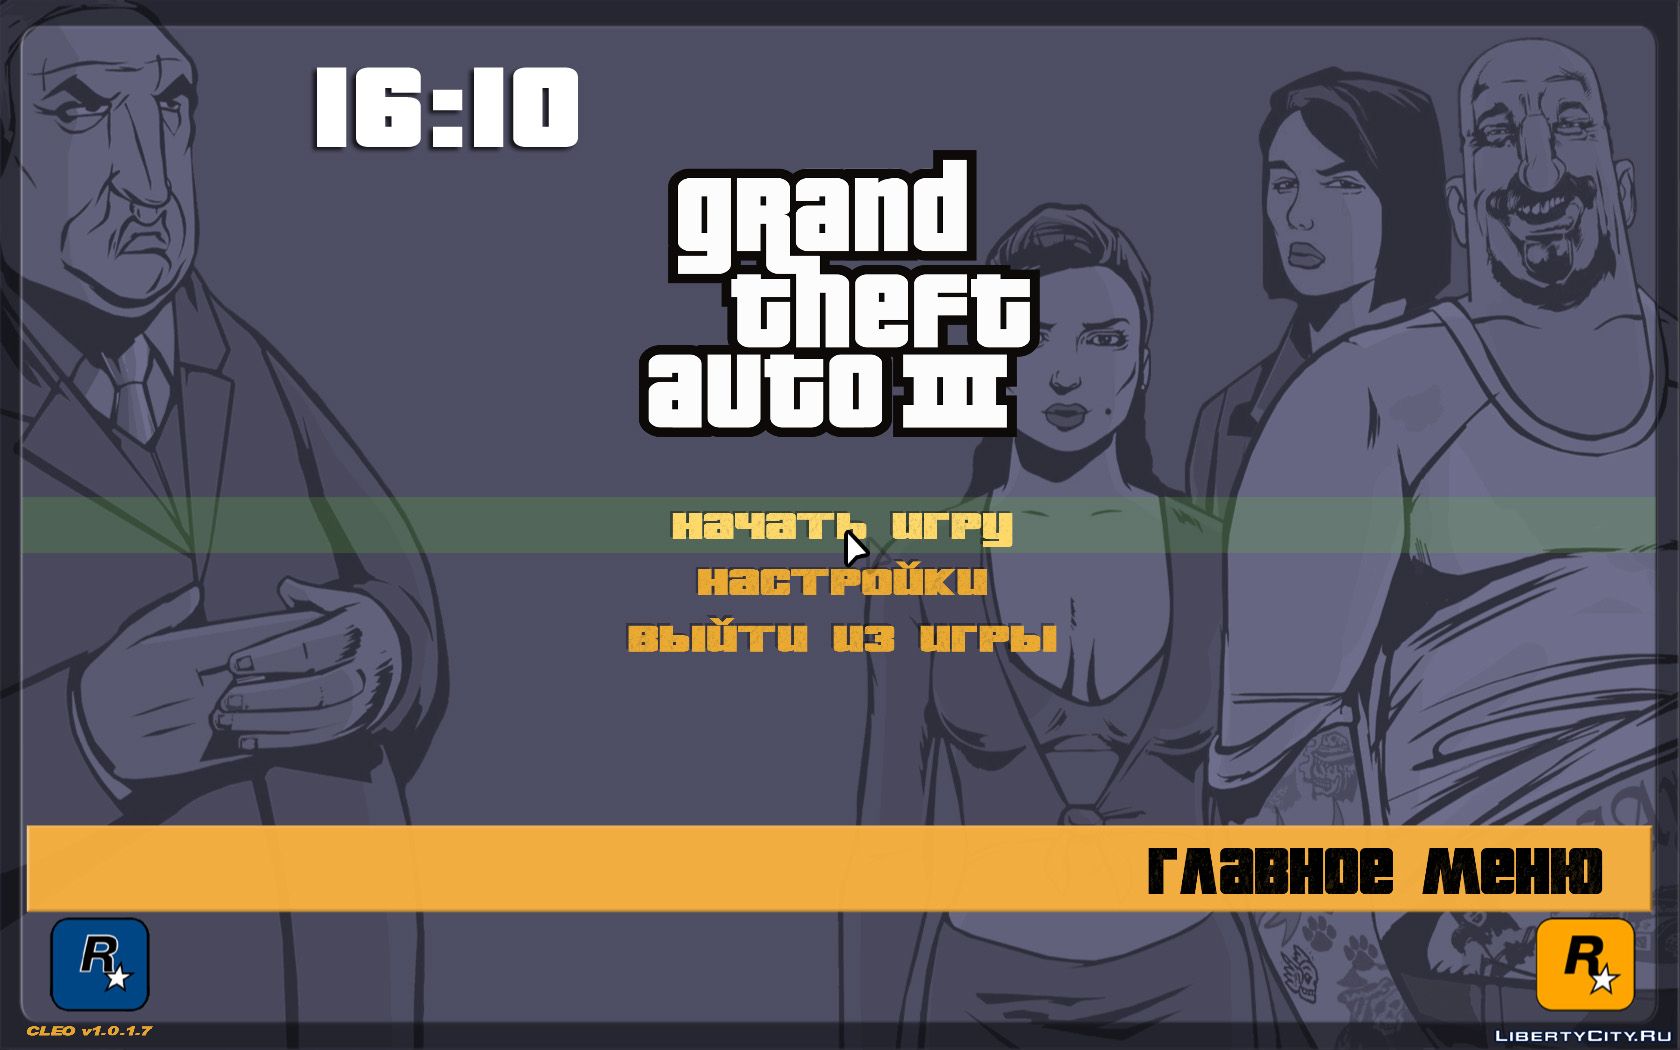 GTA 3 Skin Editor - Grand Theft Auto III - GameFront